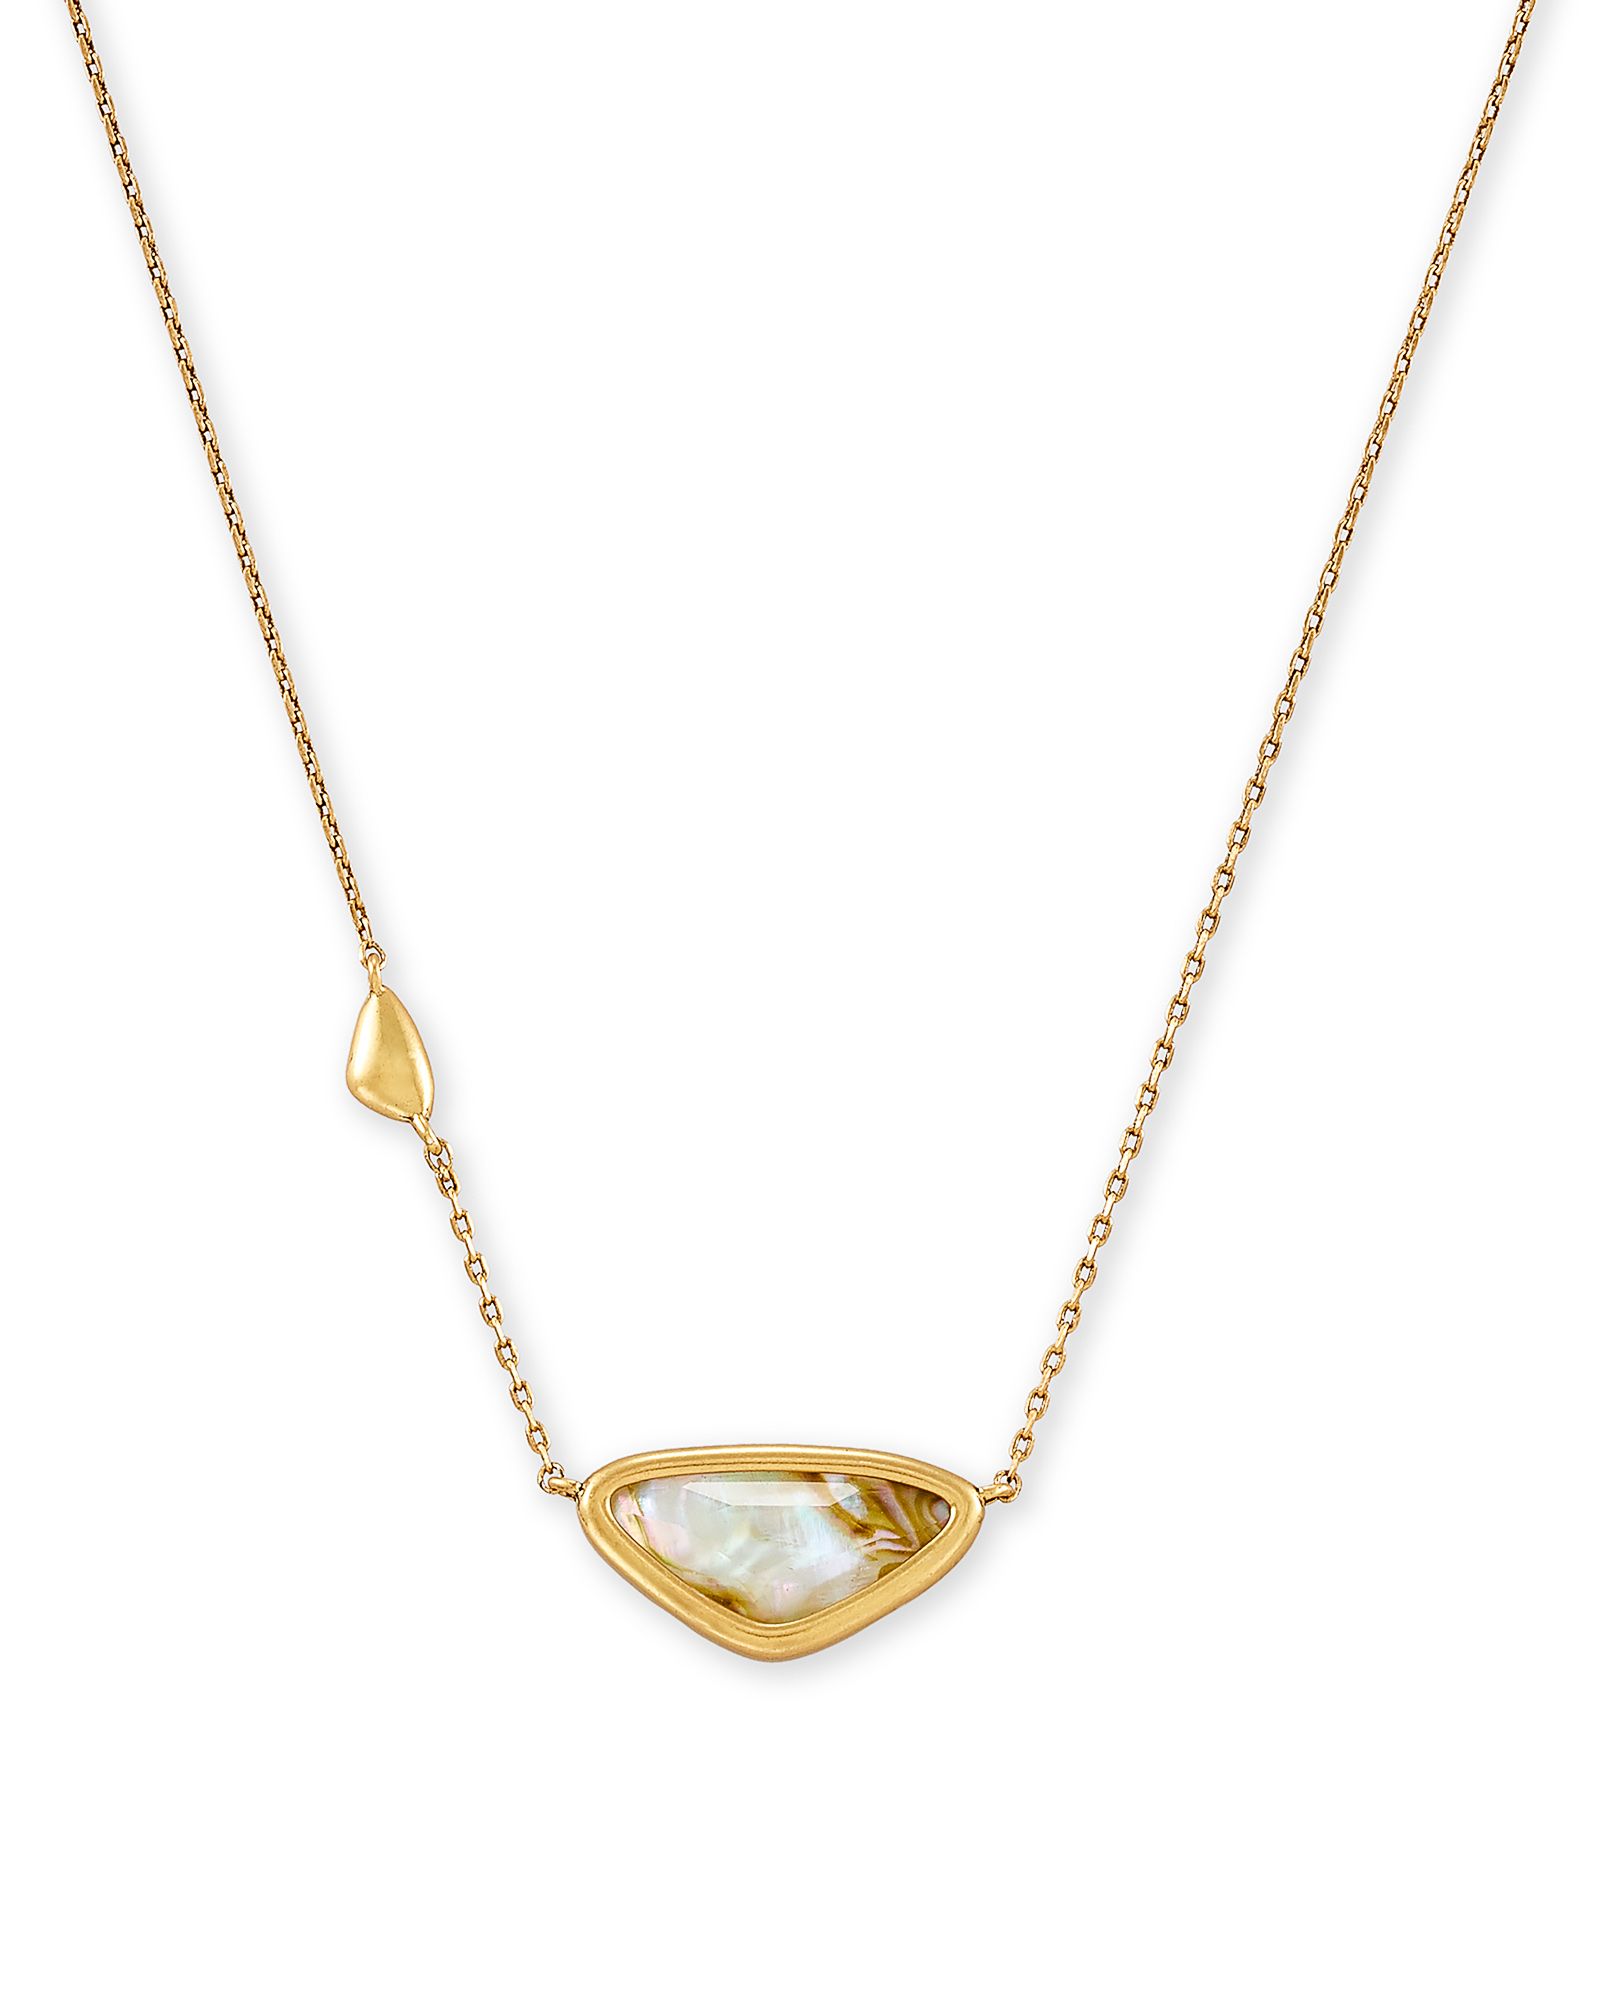 Margot Vintage Gold Pendant Necklace in White Abalone | Kendra Scott